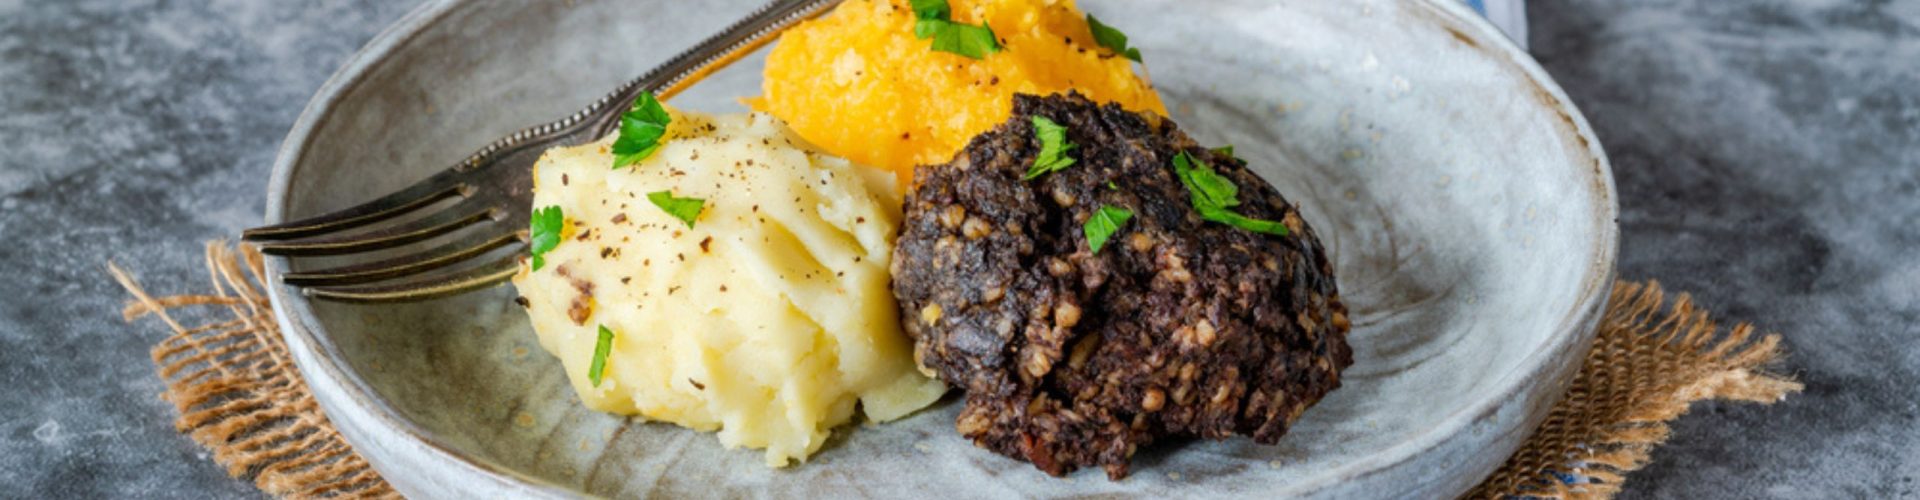 Haggis, neeps and tatties (haggis with turnips and potatoes) - traditional Scottish dish for Burns Night.